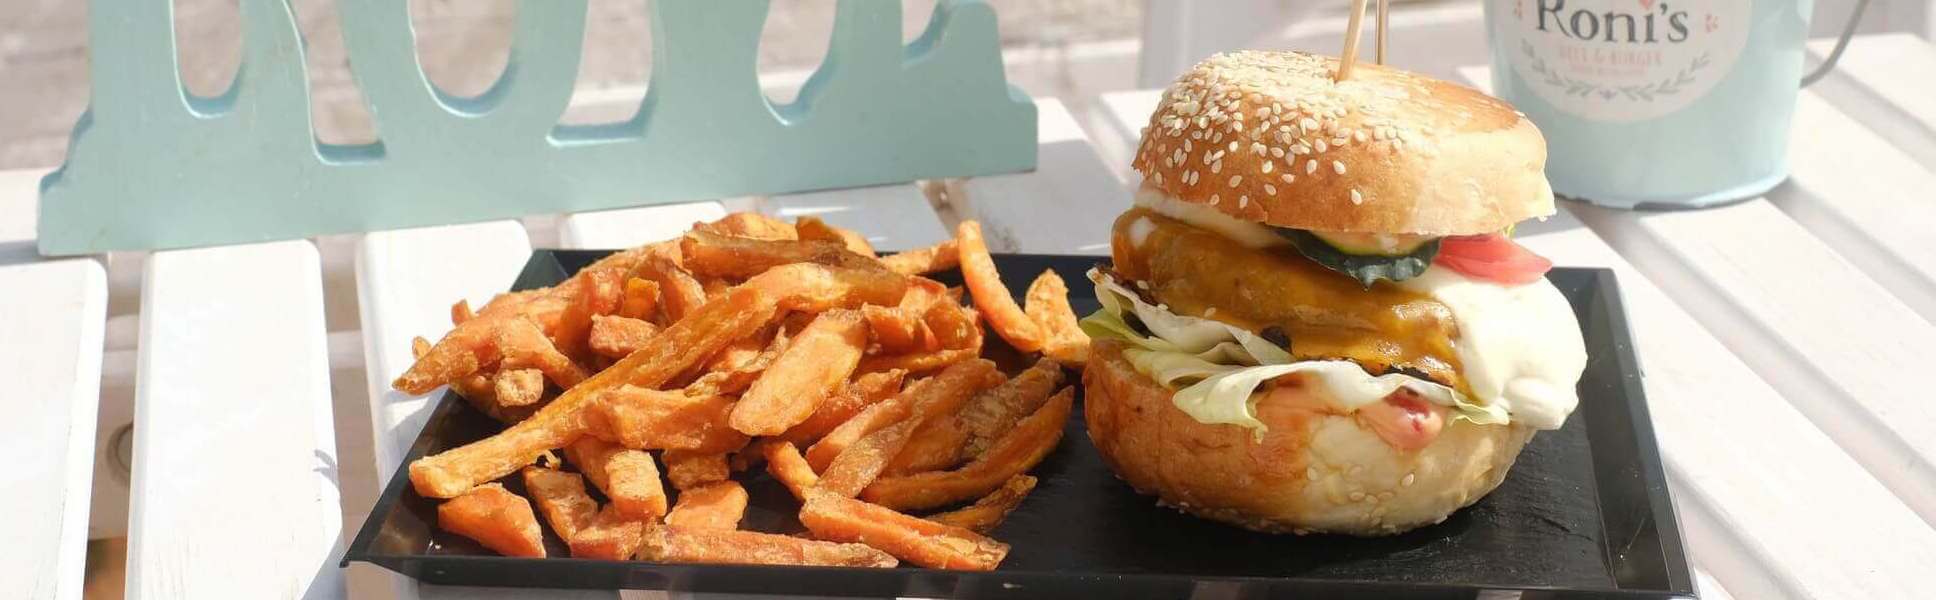 veggie-burger-ronis-deli-burgers-playa-den-bossa